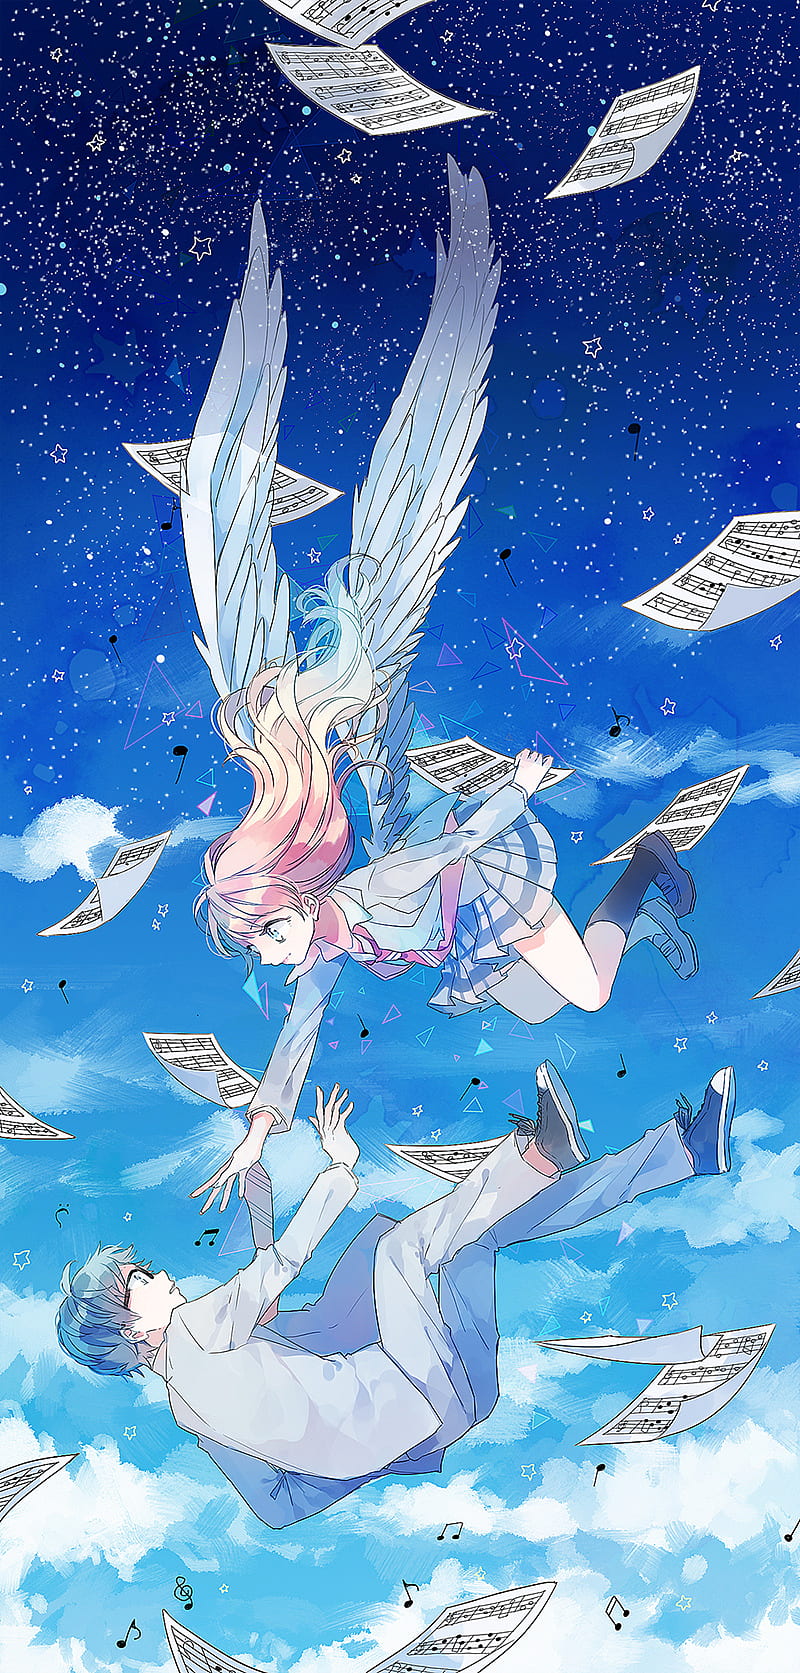 Shigatsu wa Kimi no Uso (Your Lie In April) Mobile Wallpaper by Furai  #1854068 - Zerochan Anime Image Board